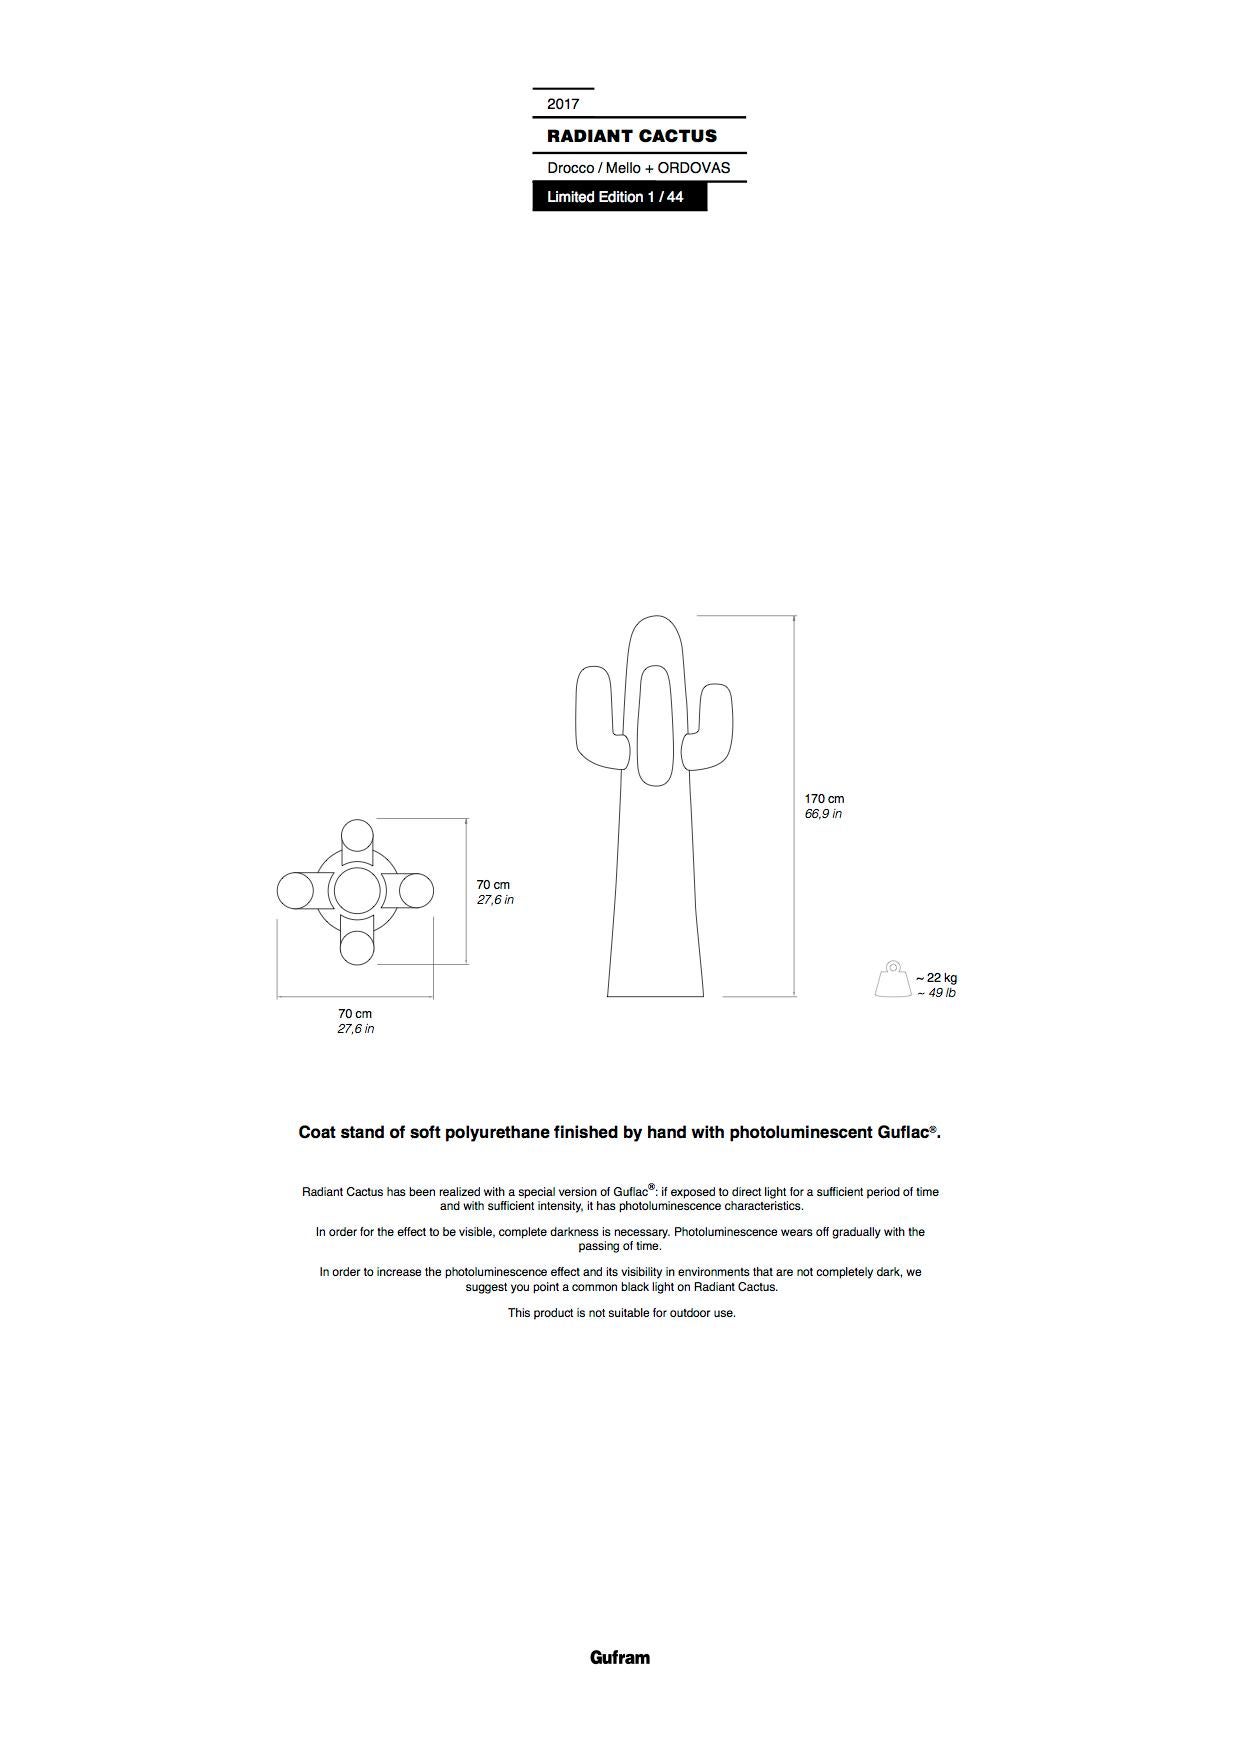 Contemporary Gufram Radiant Cactus Sculptural Coatrack by Drocco & Mello and Ordovas For Sale